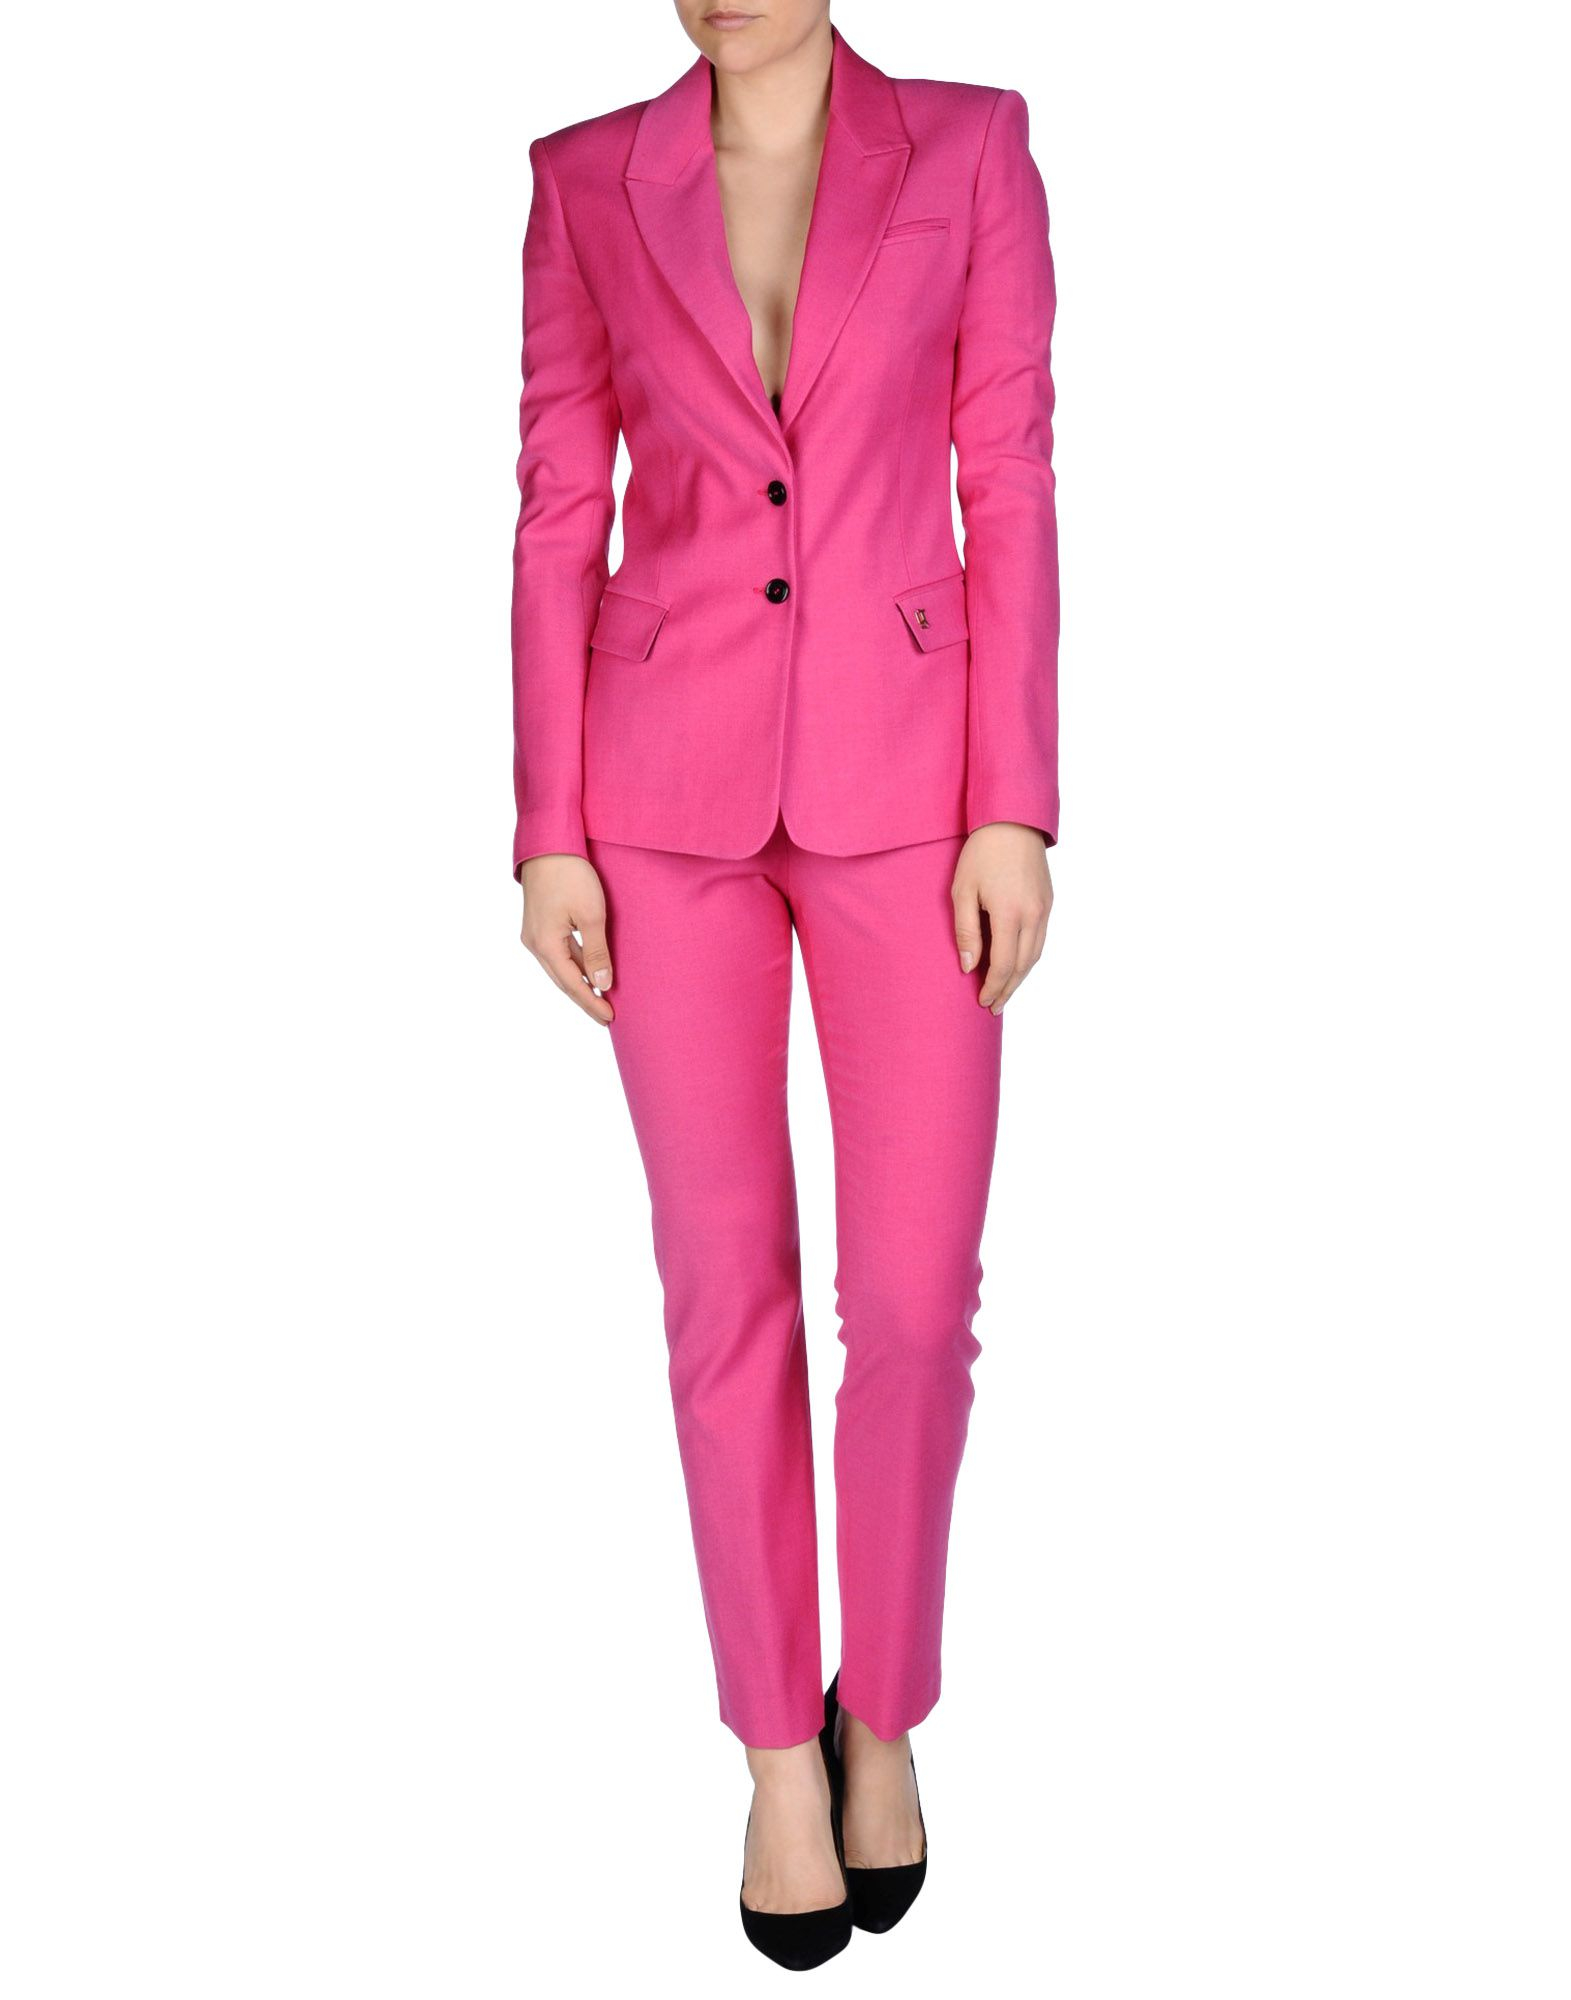 Hot Pink Blazer for Mature Men | Hockerty